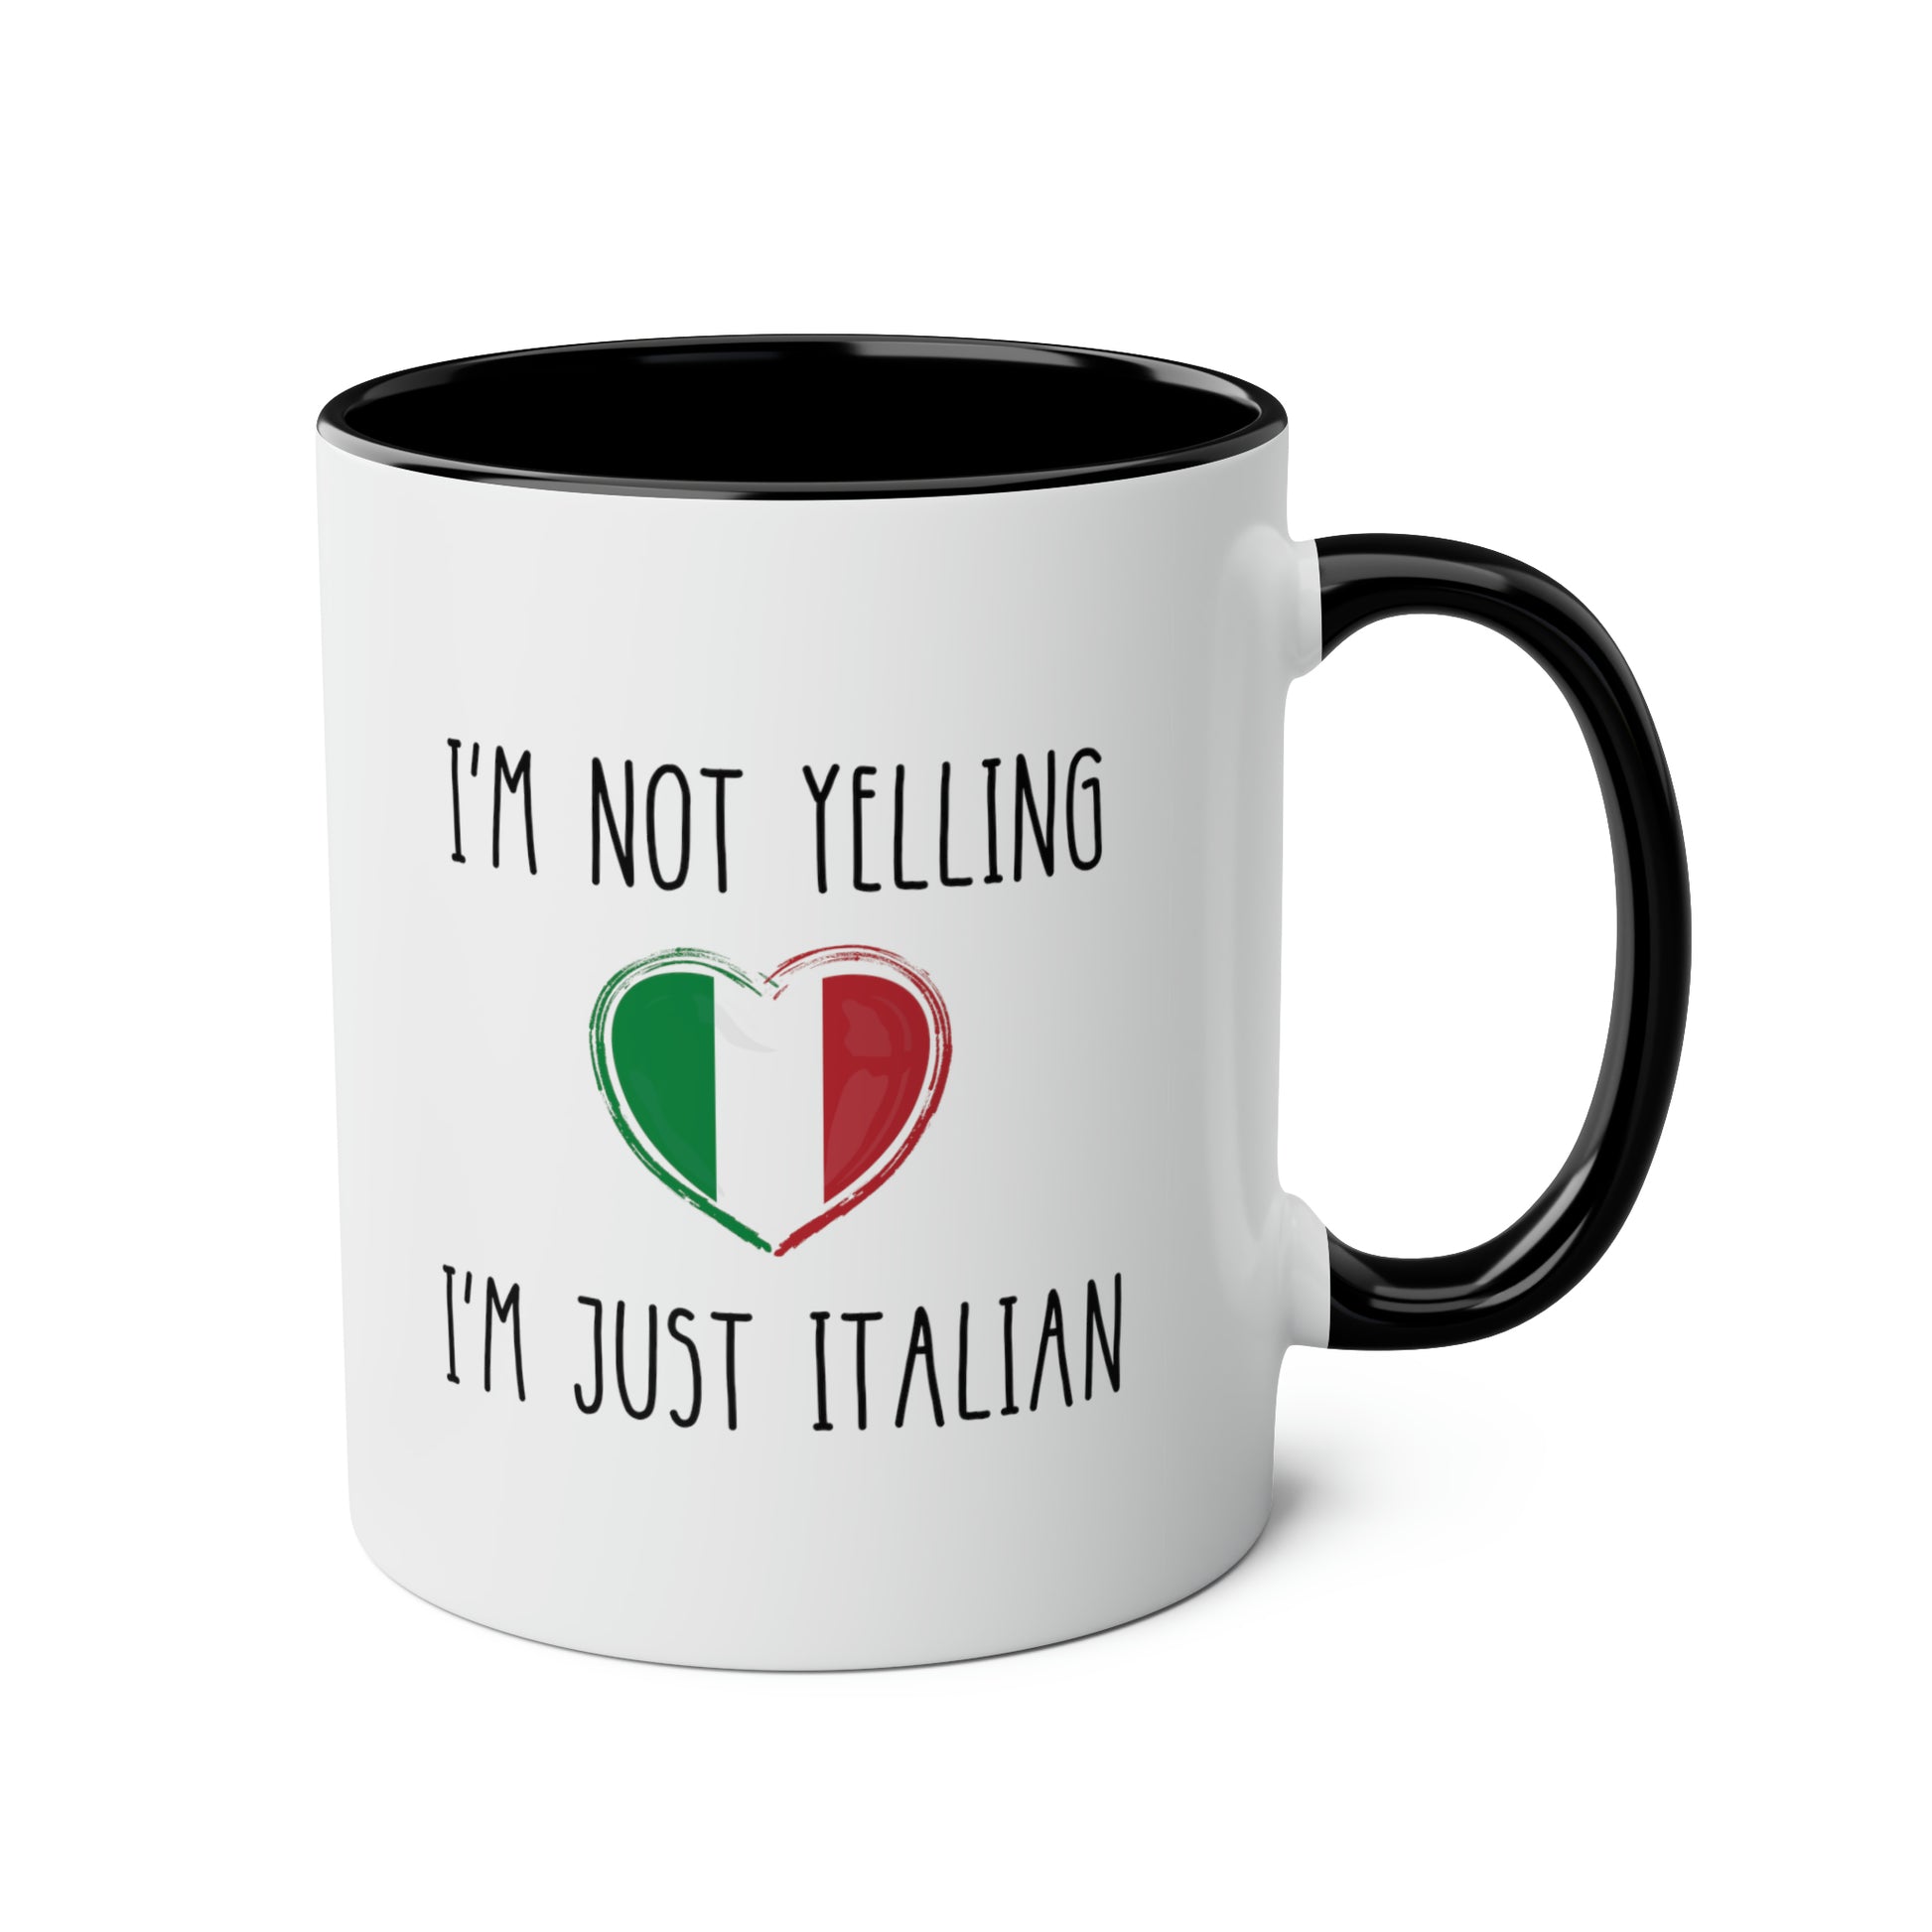 I'm Not Yelling I'm Just Italian 11oz white with black accent funny large coffee mug gift for italy love loud italiana italiano waveywares wavey wares wavywares wavy wares